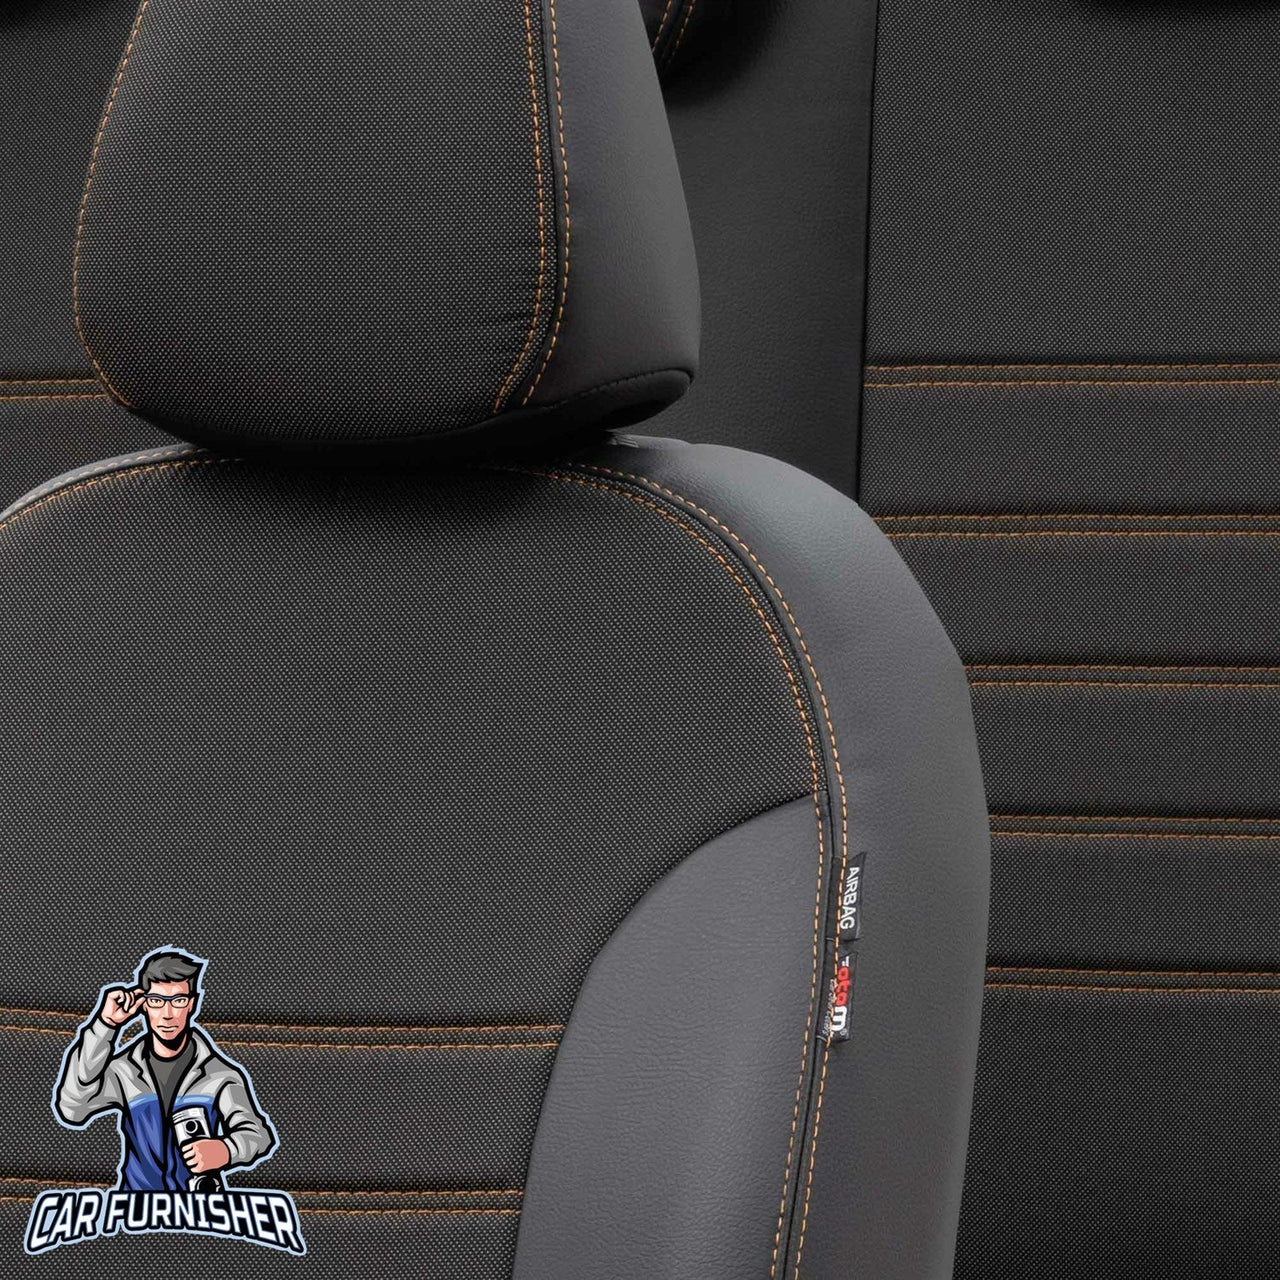 Jeep Grand Cherokee Seat Cover Paris Leather & Jacquard Design Dark Beige Leather & Jacquard Fabric